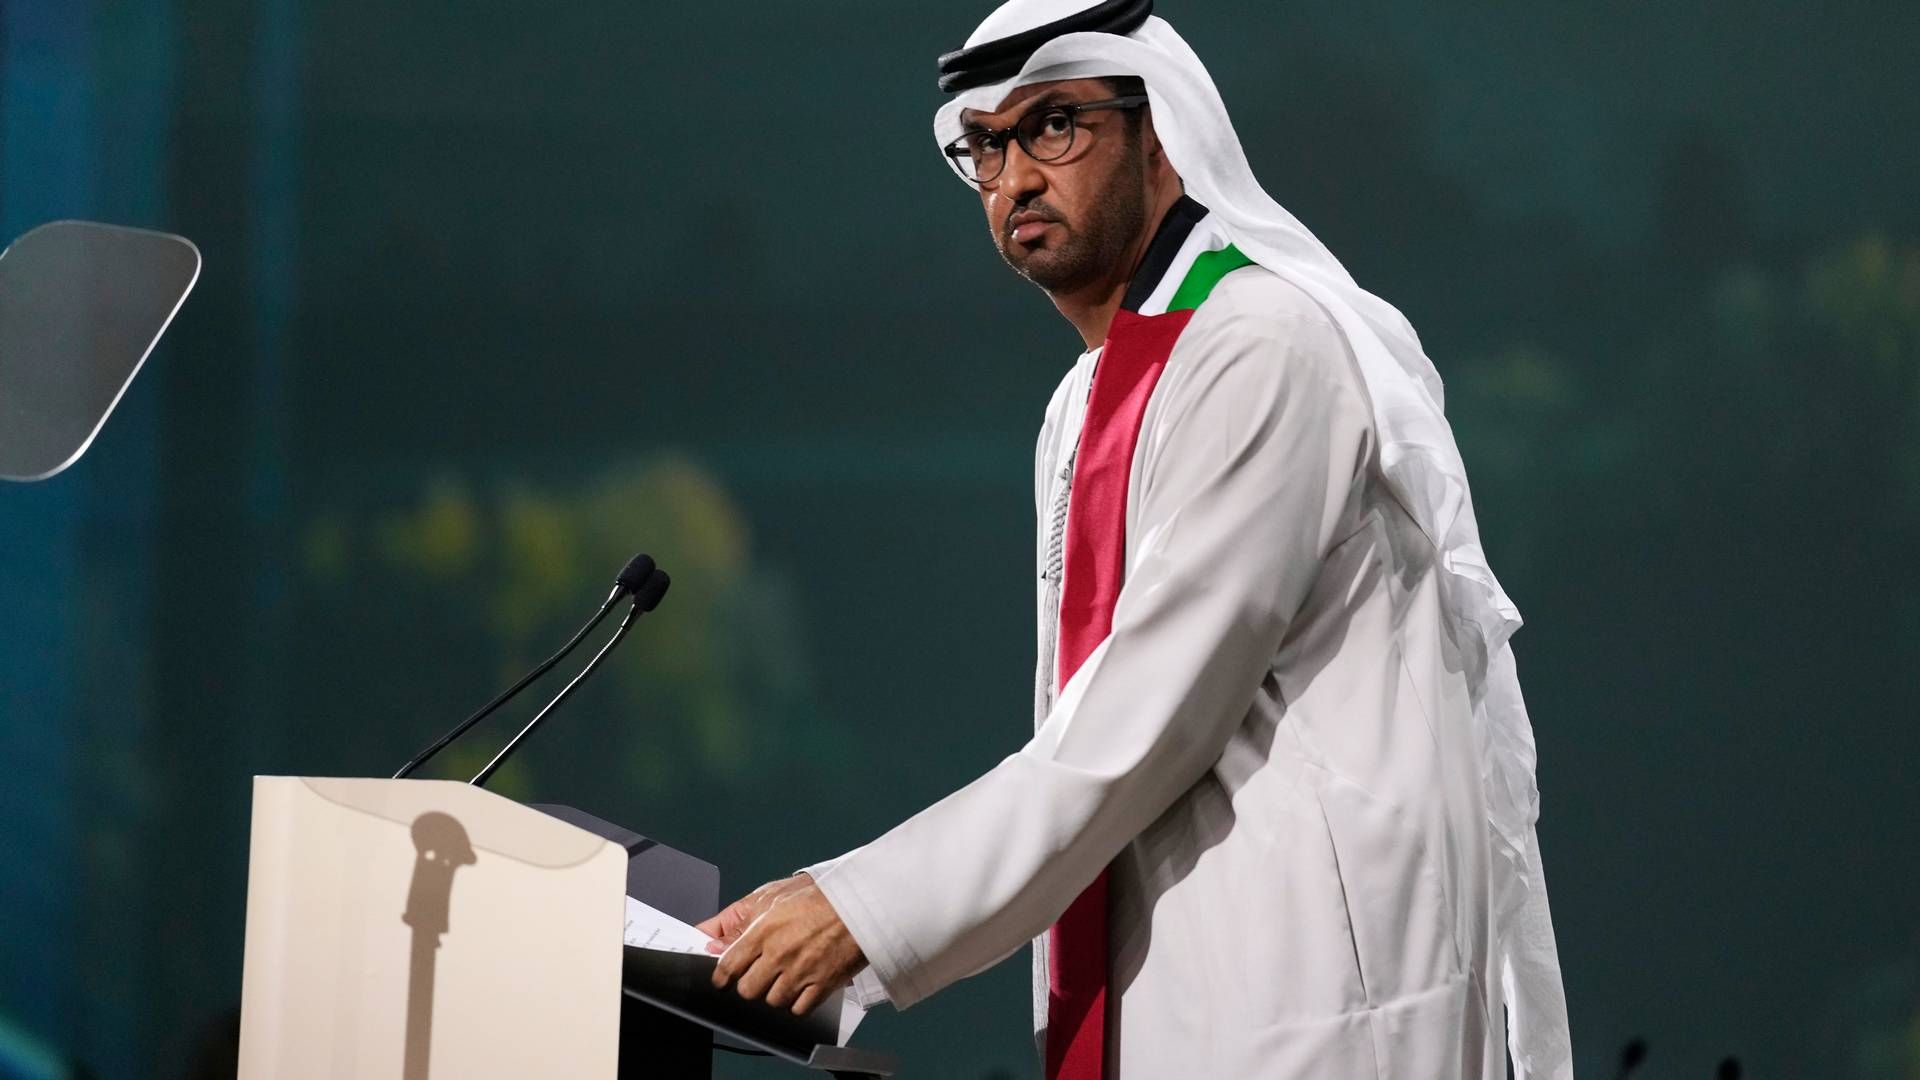 UUNGÅELIG: Nå sier Sultan al-Jaber at det er «uunngåelig med utfasing av fossil energi». | Foto: AP Photo/Kamran Jebreili